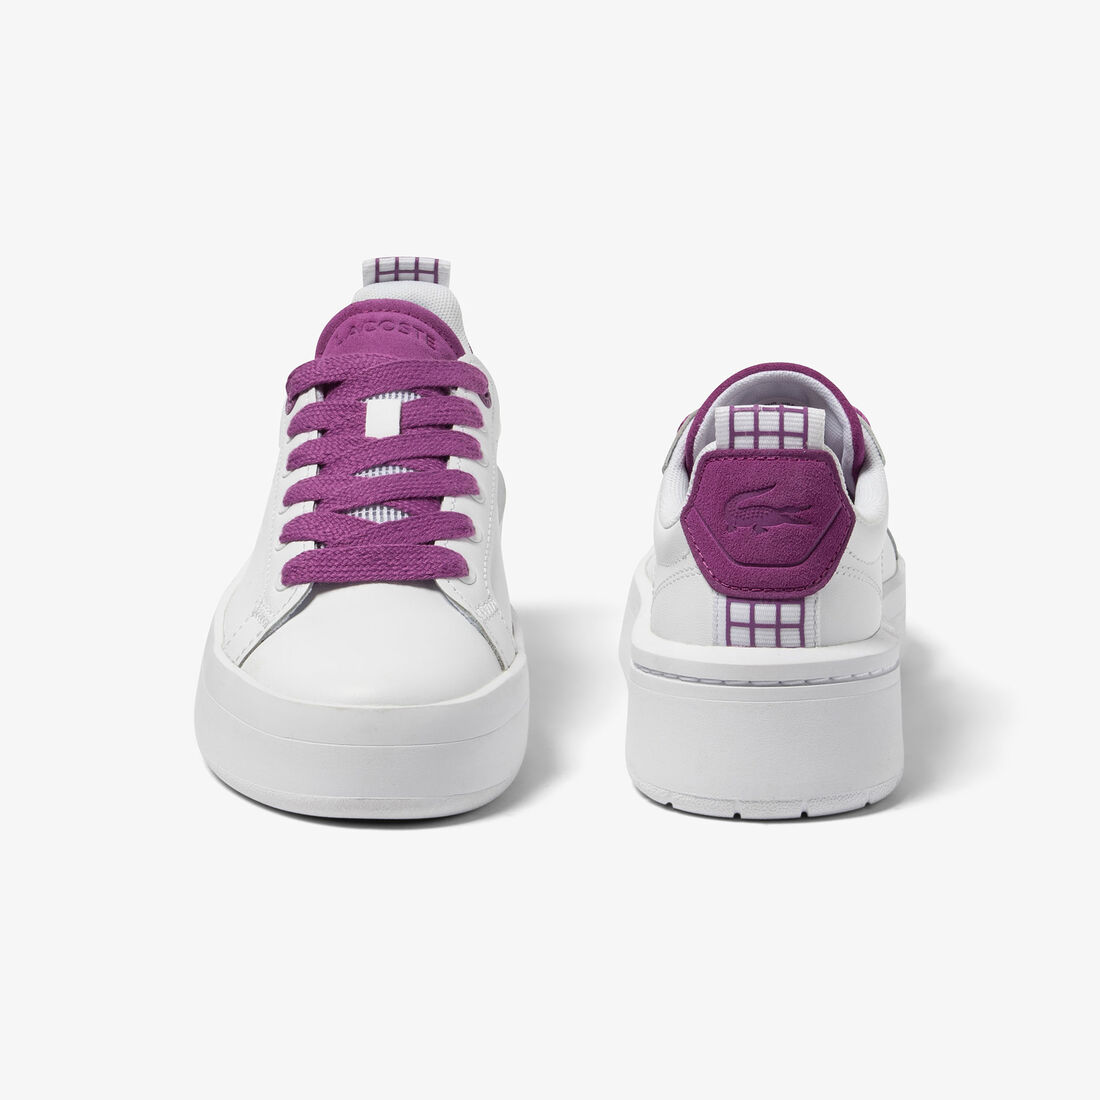 Lacoste Carnaby Plattform Leder Sneakers Damen Weiß Lila | BGHY-70836